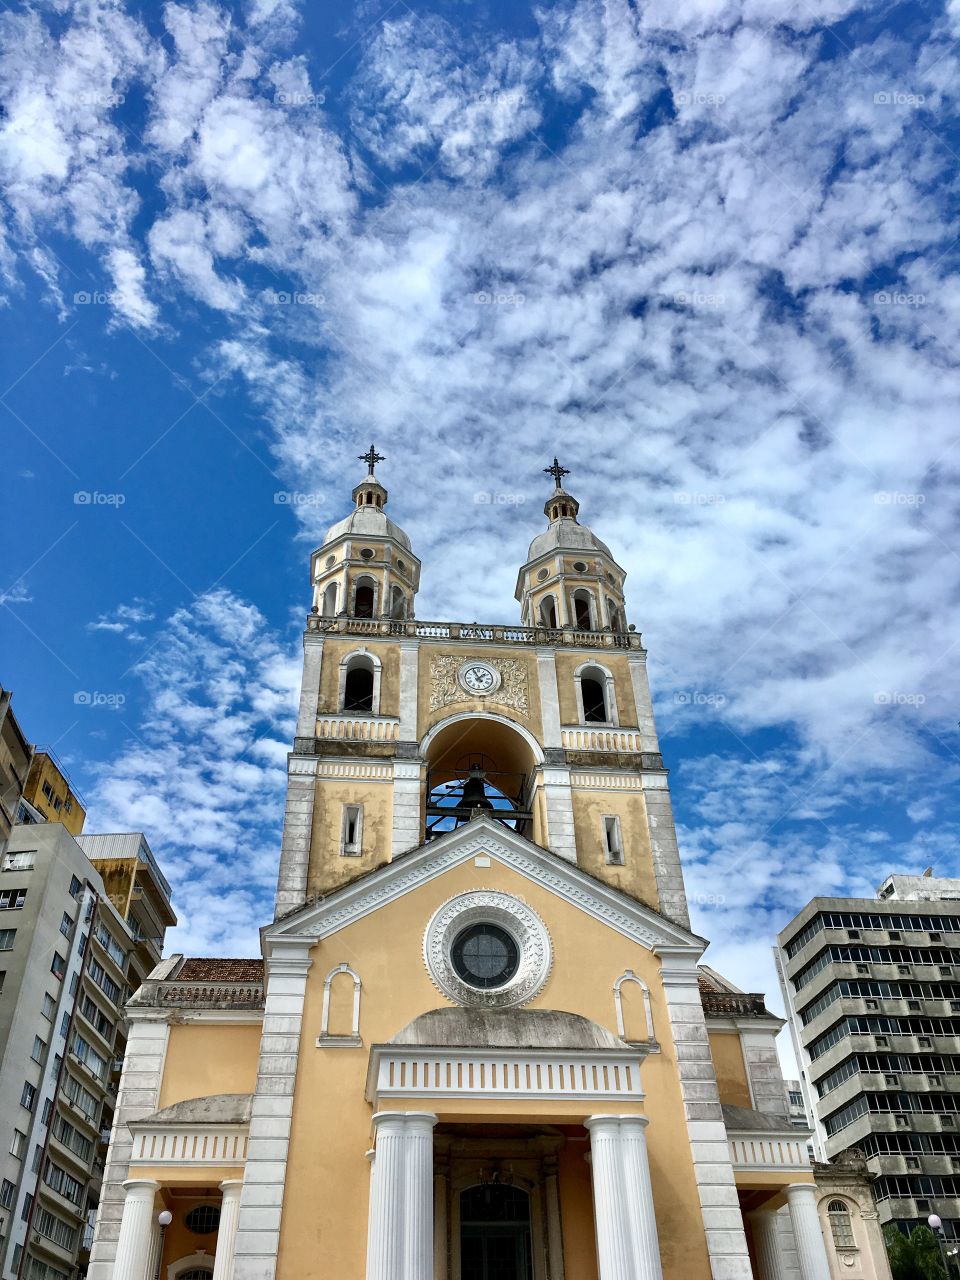 Cathedral Church.

Florianopolis, Santa Catarina (Brazil).